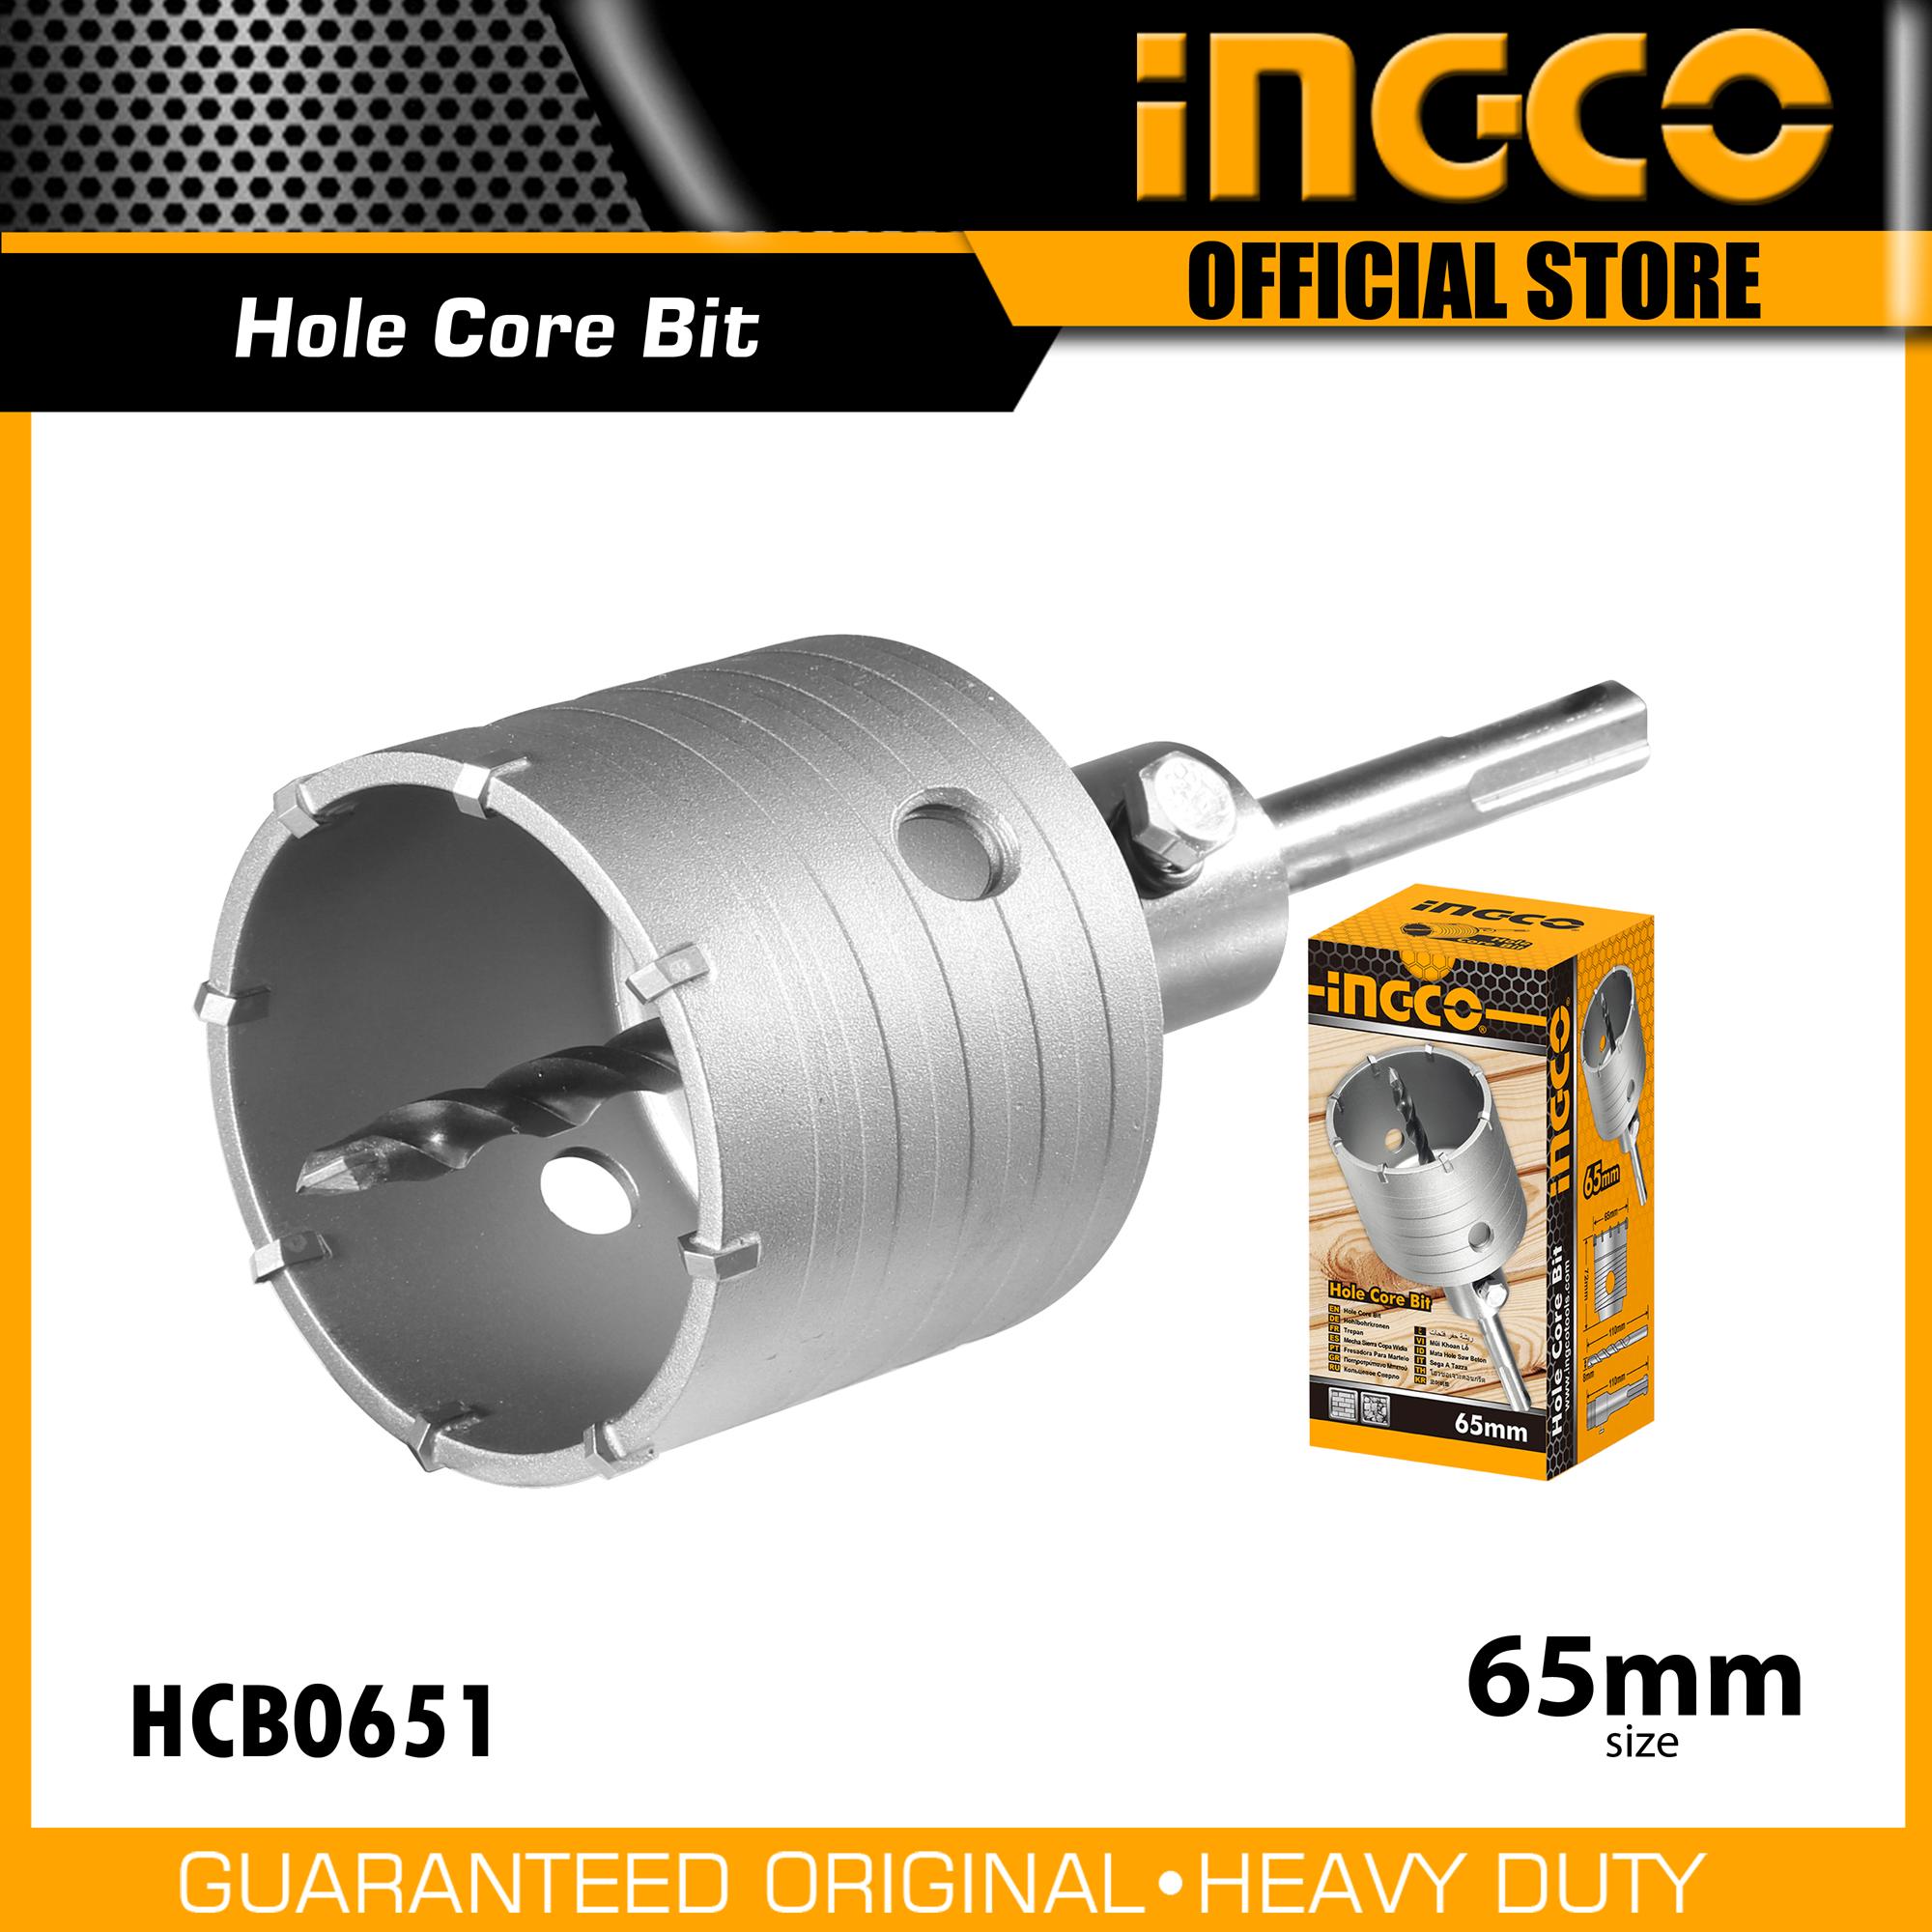 Buy Ingco Hole Core Bit Hcb0651 Online On Qetaat.Com